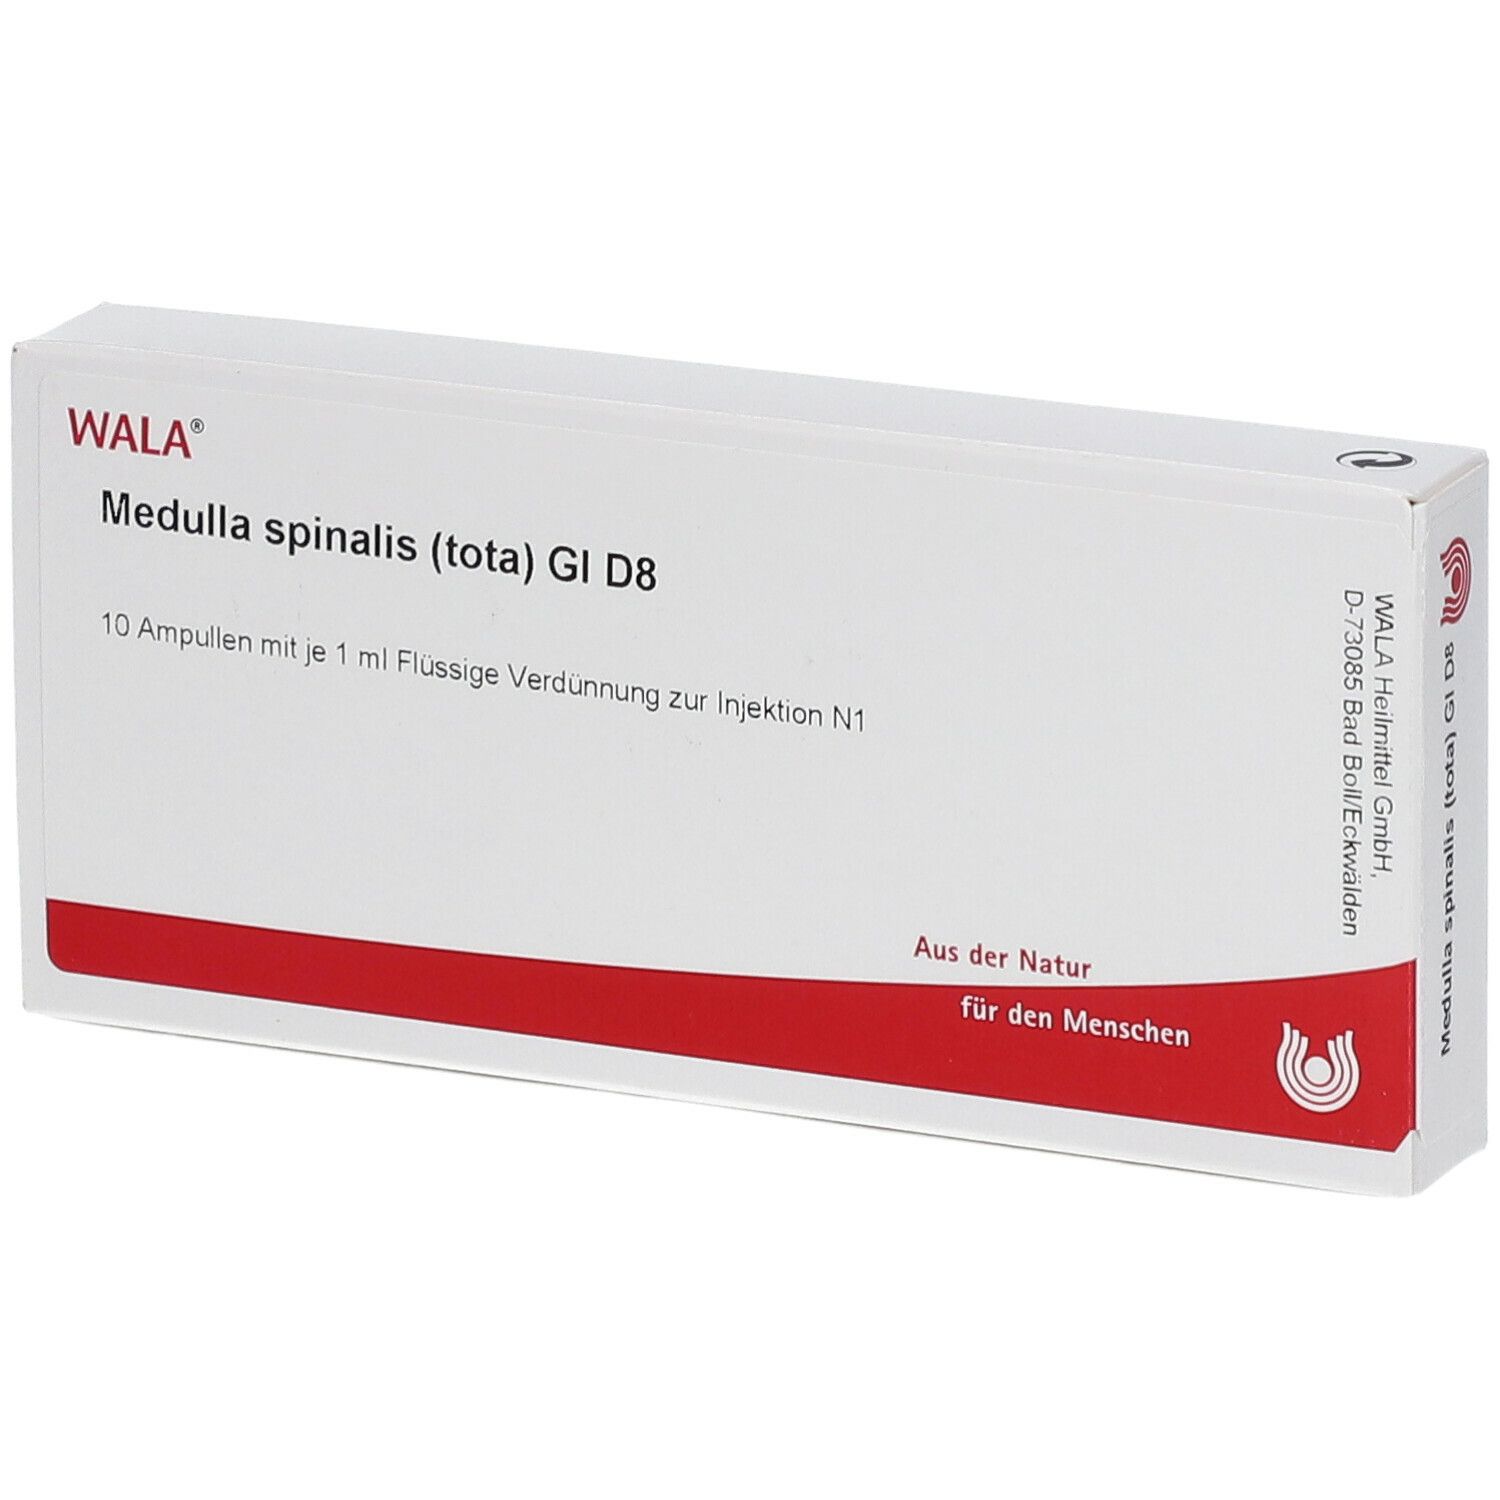 Wala® Medulla spinalis tota Gl D 8